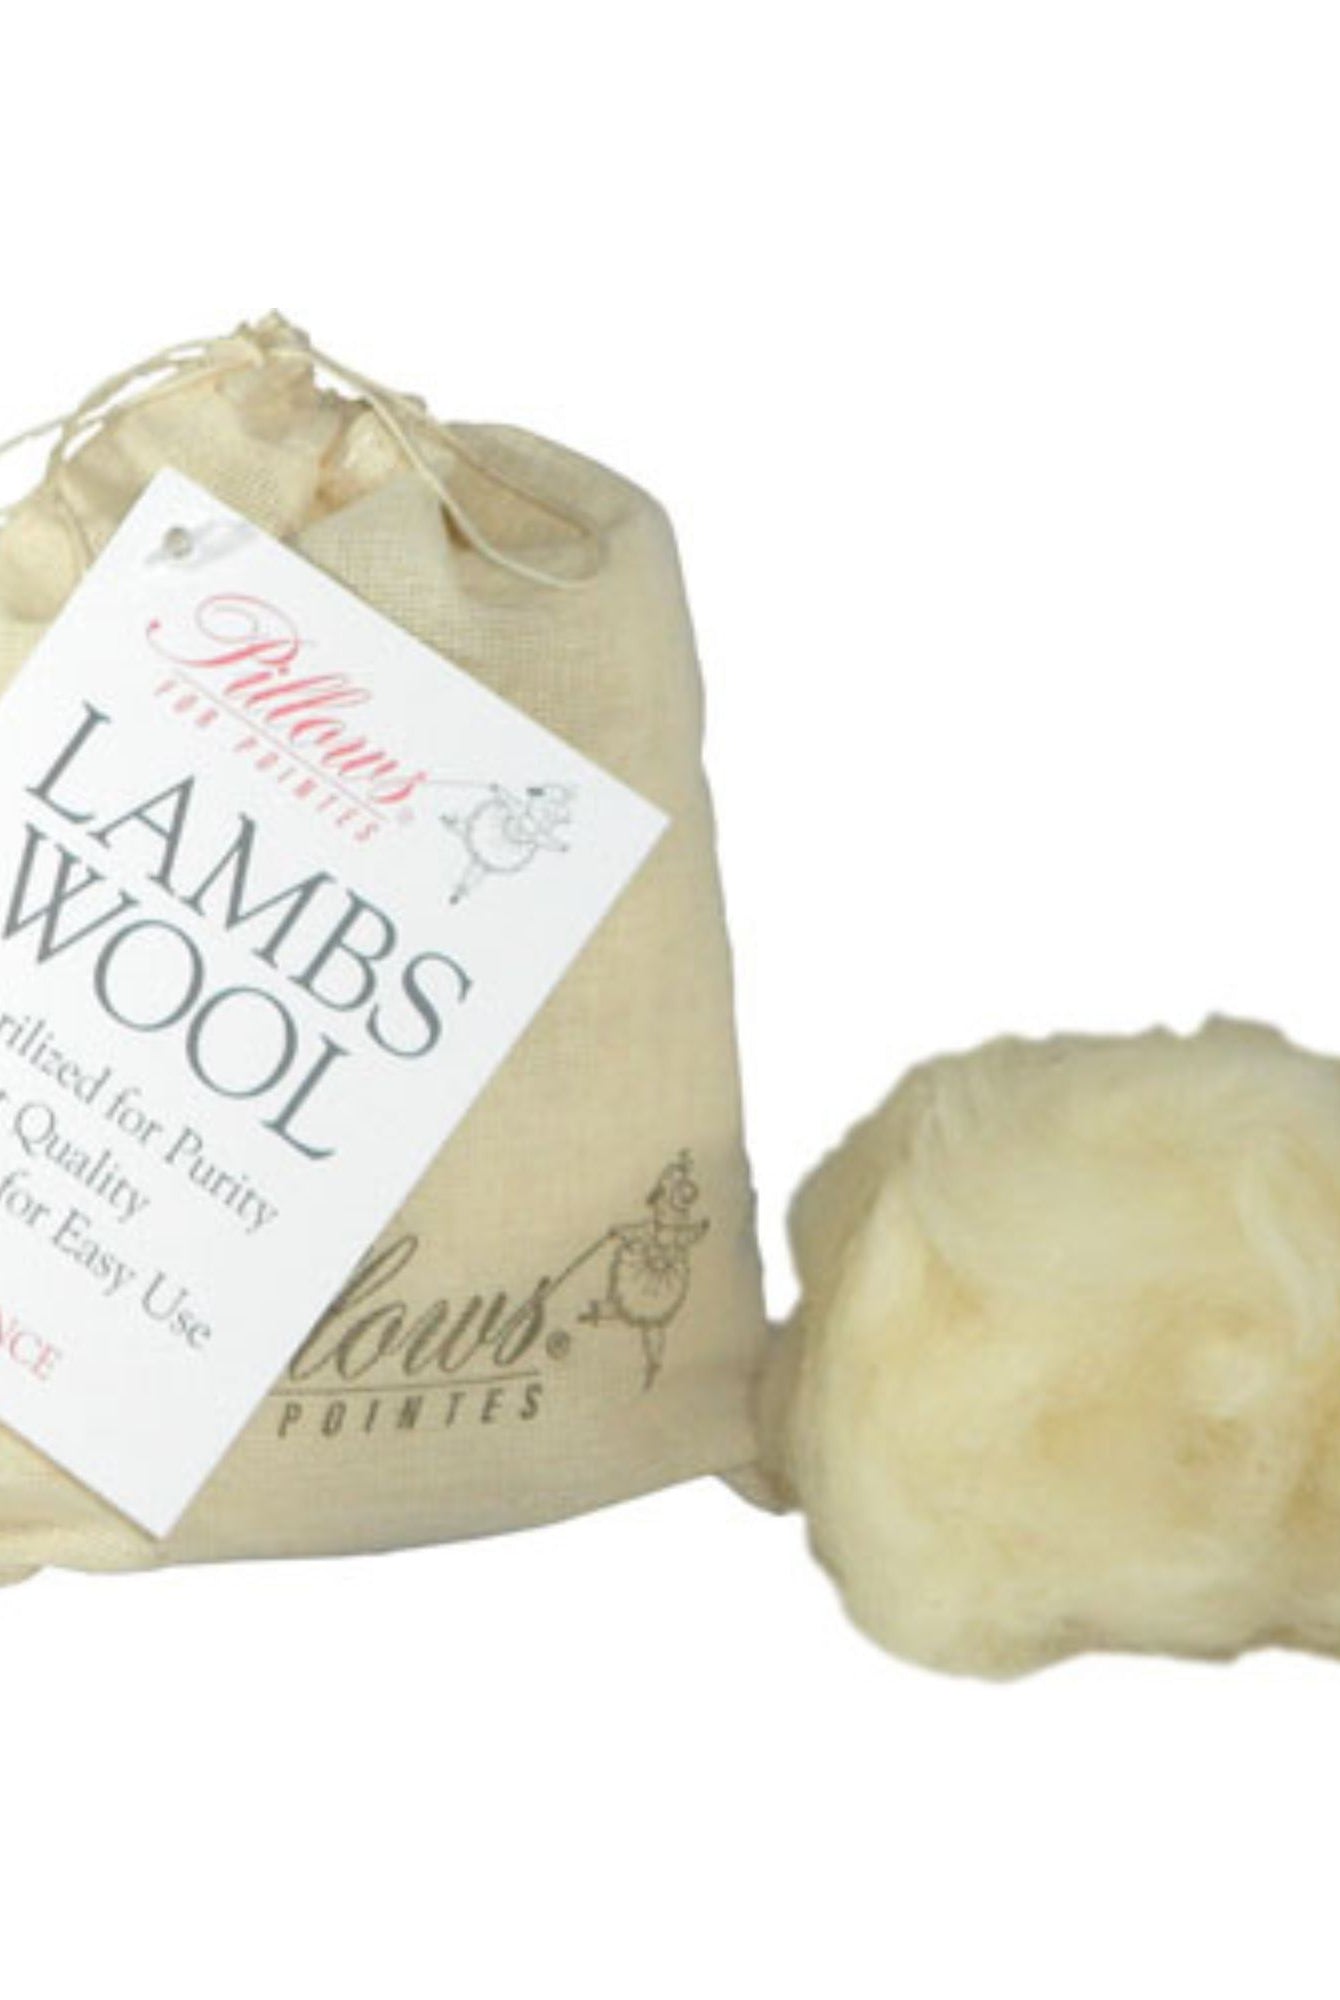 Lambs Wool 1 Oounce White Soft